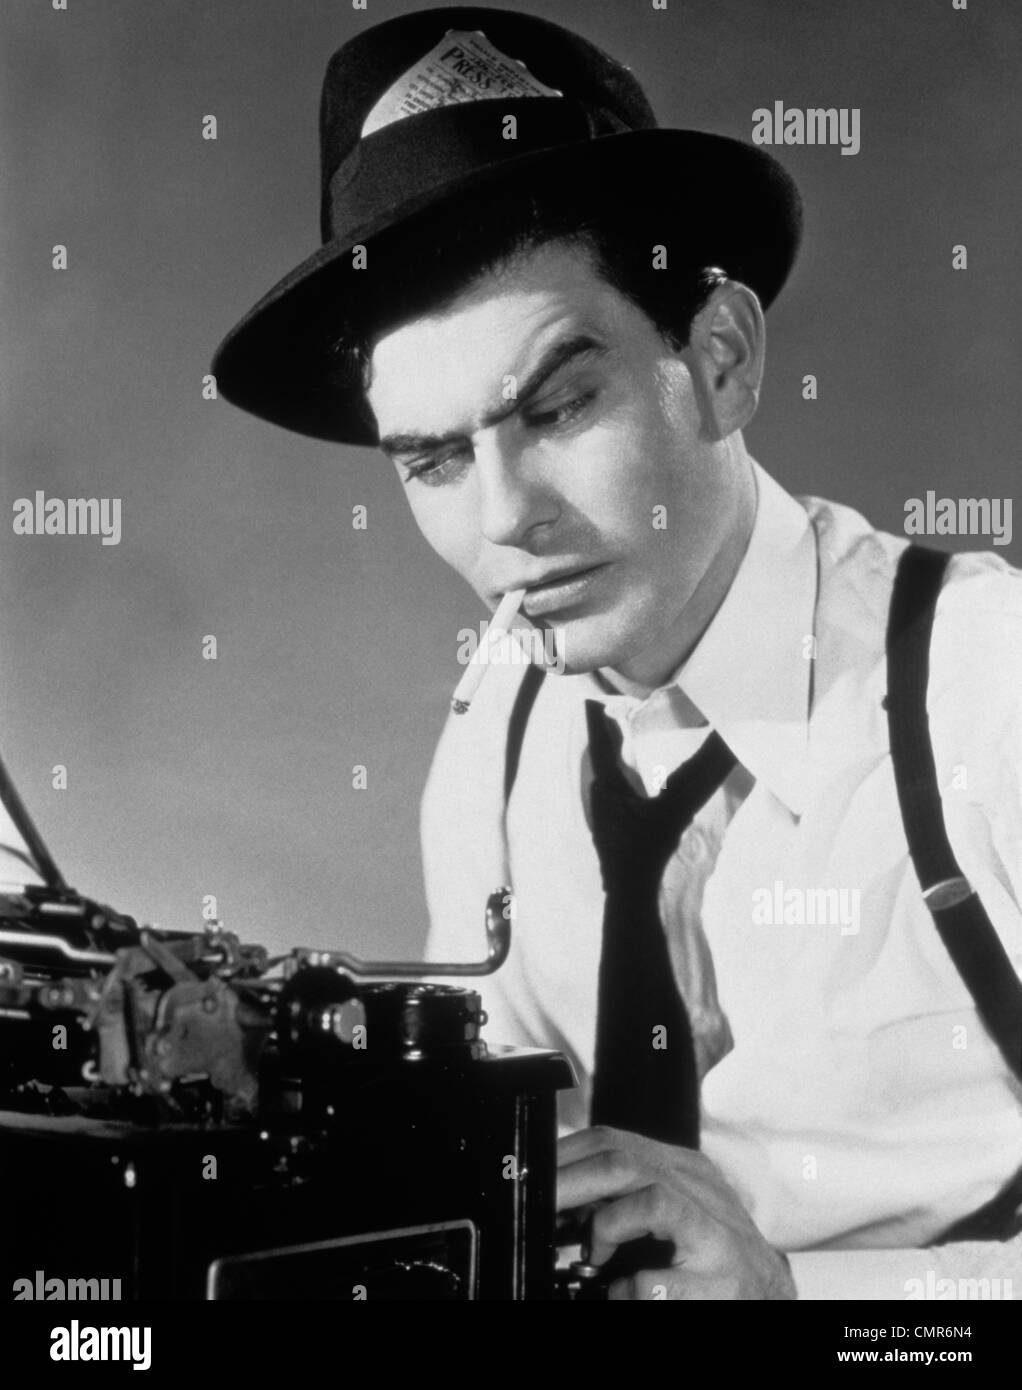 1940s 1950s MAN REPORTER SITTING AT TYPEWRITER SMOKING CIGARETTE PRESS PASS IN HATBAND Stock Photo